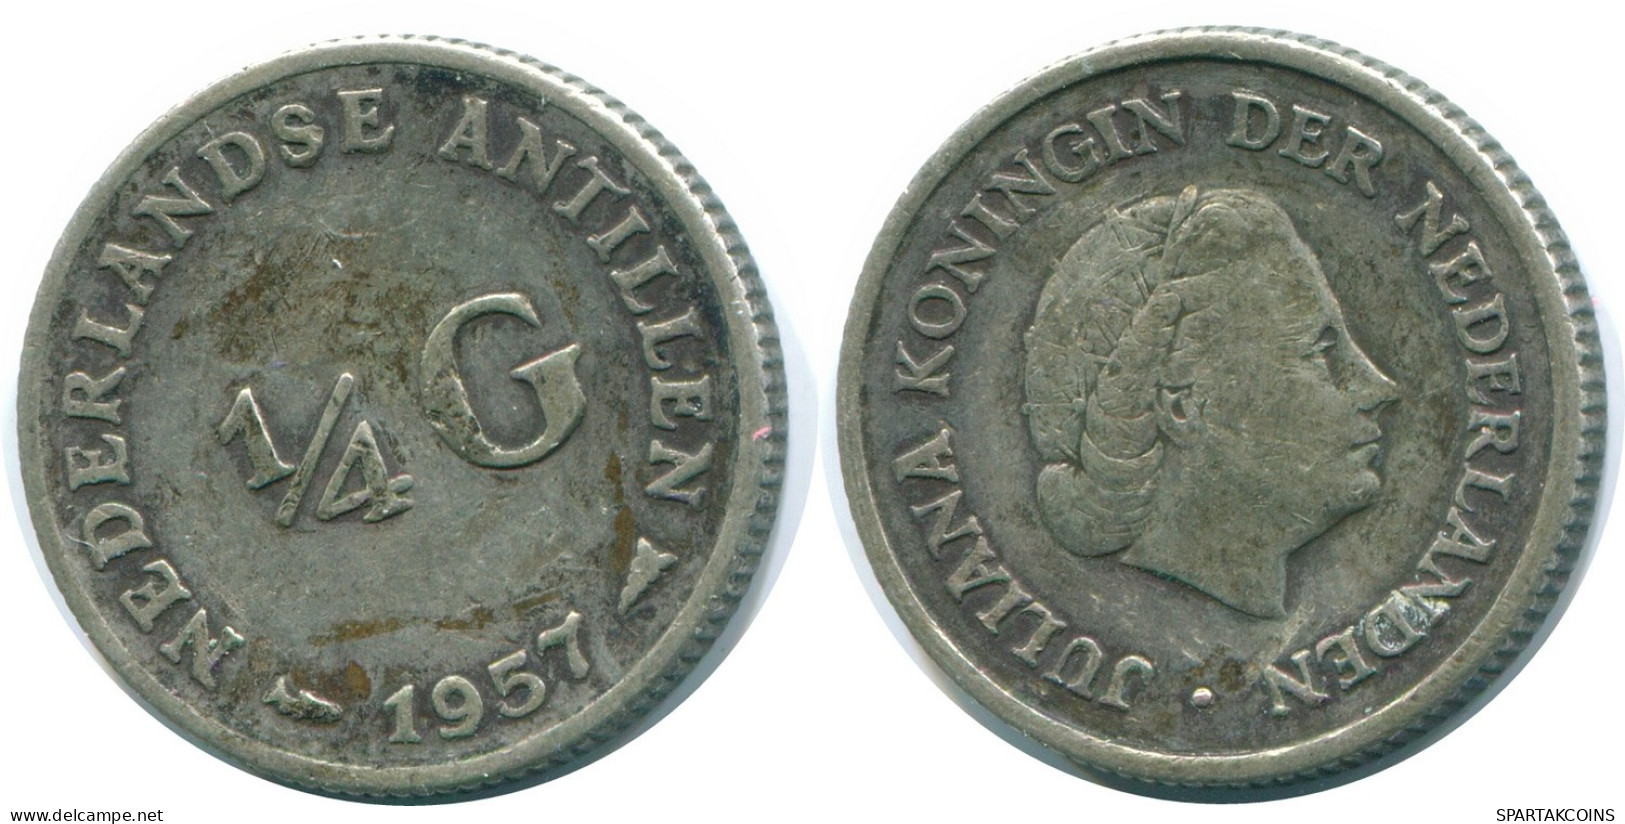 1/4 GULDEN 1957 NETHERLANDS ANTILLES SILVER Colonial Coin #NL10988.4.U.A - Netherlands Antilles